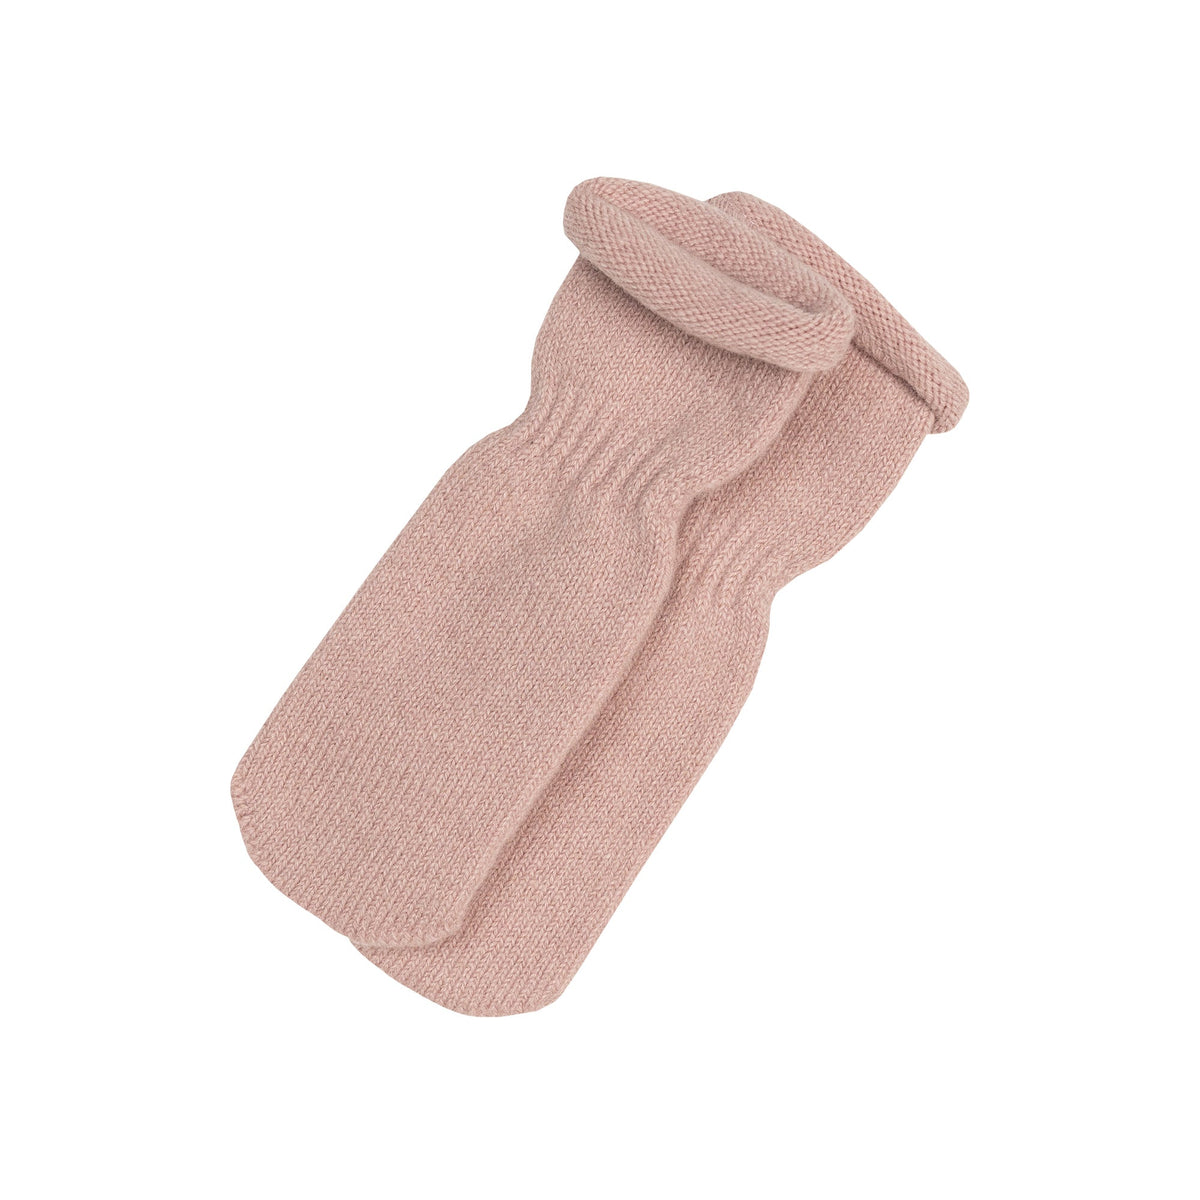 MENIQUE Knit Baby Socks/Mittens Cashmere Blend